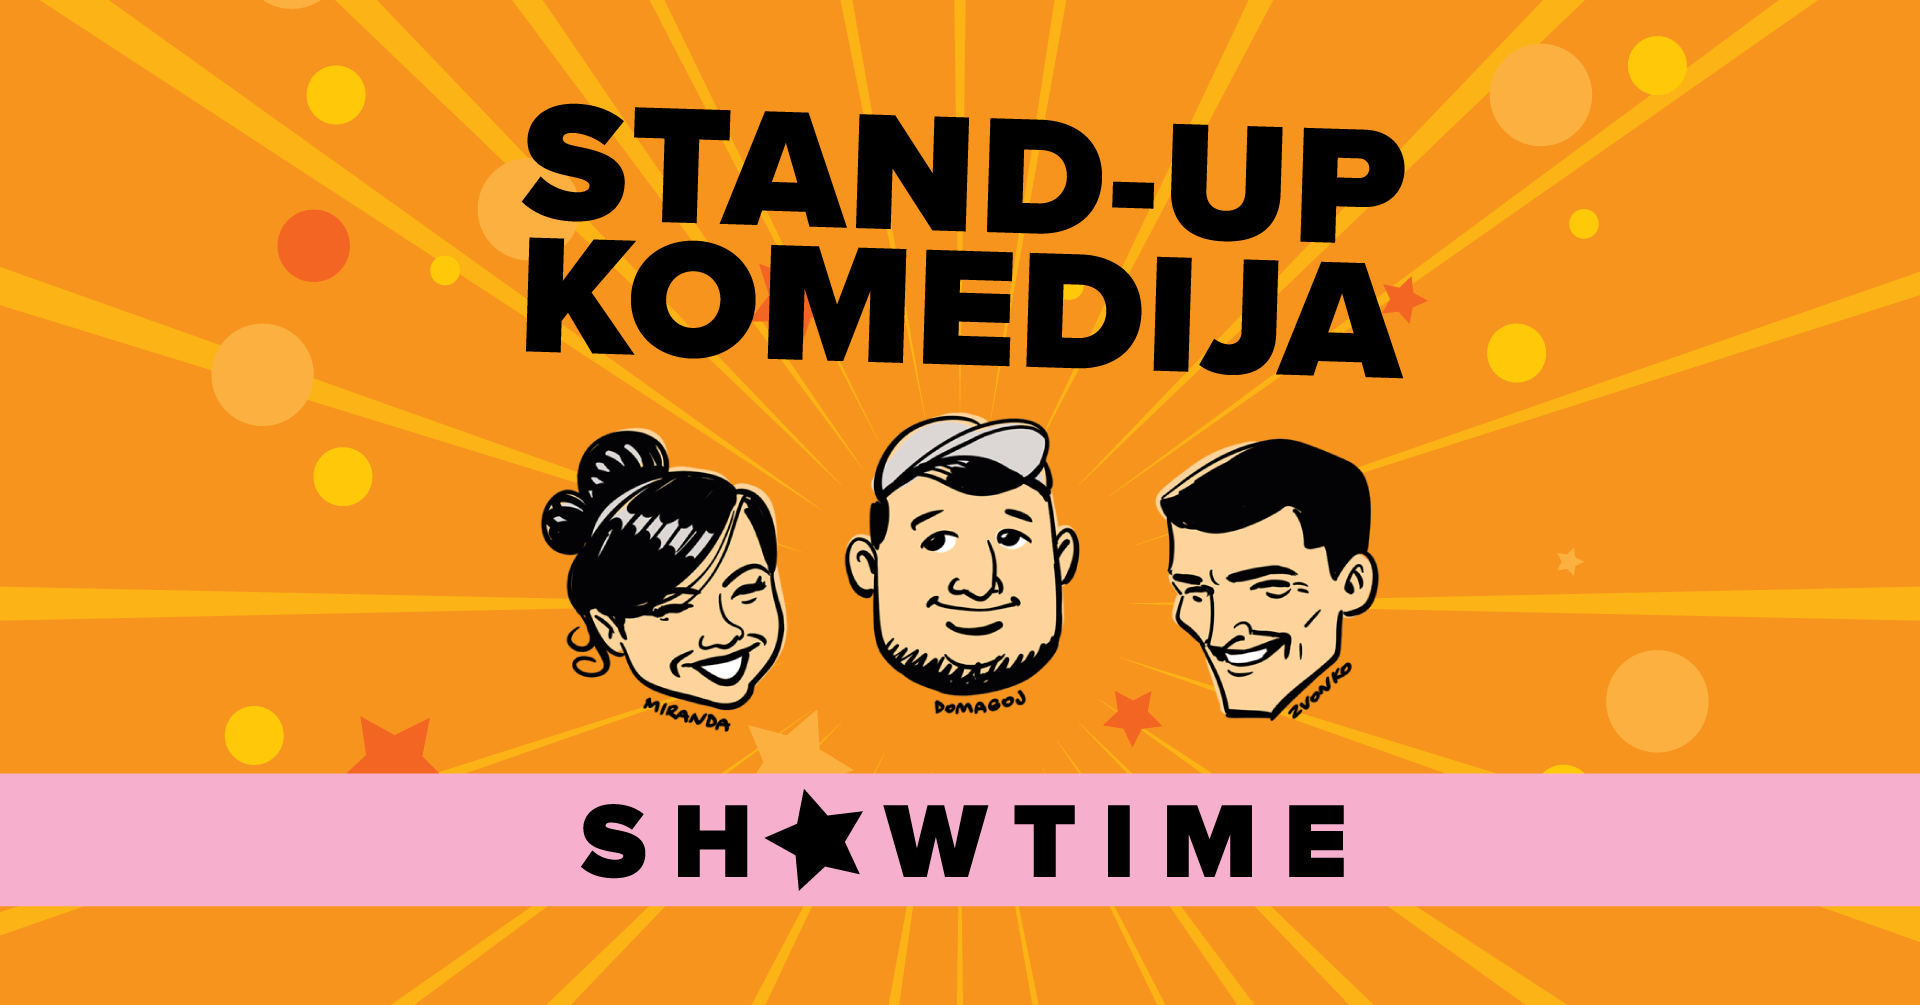 SHOWTIME - stand up komedija